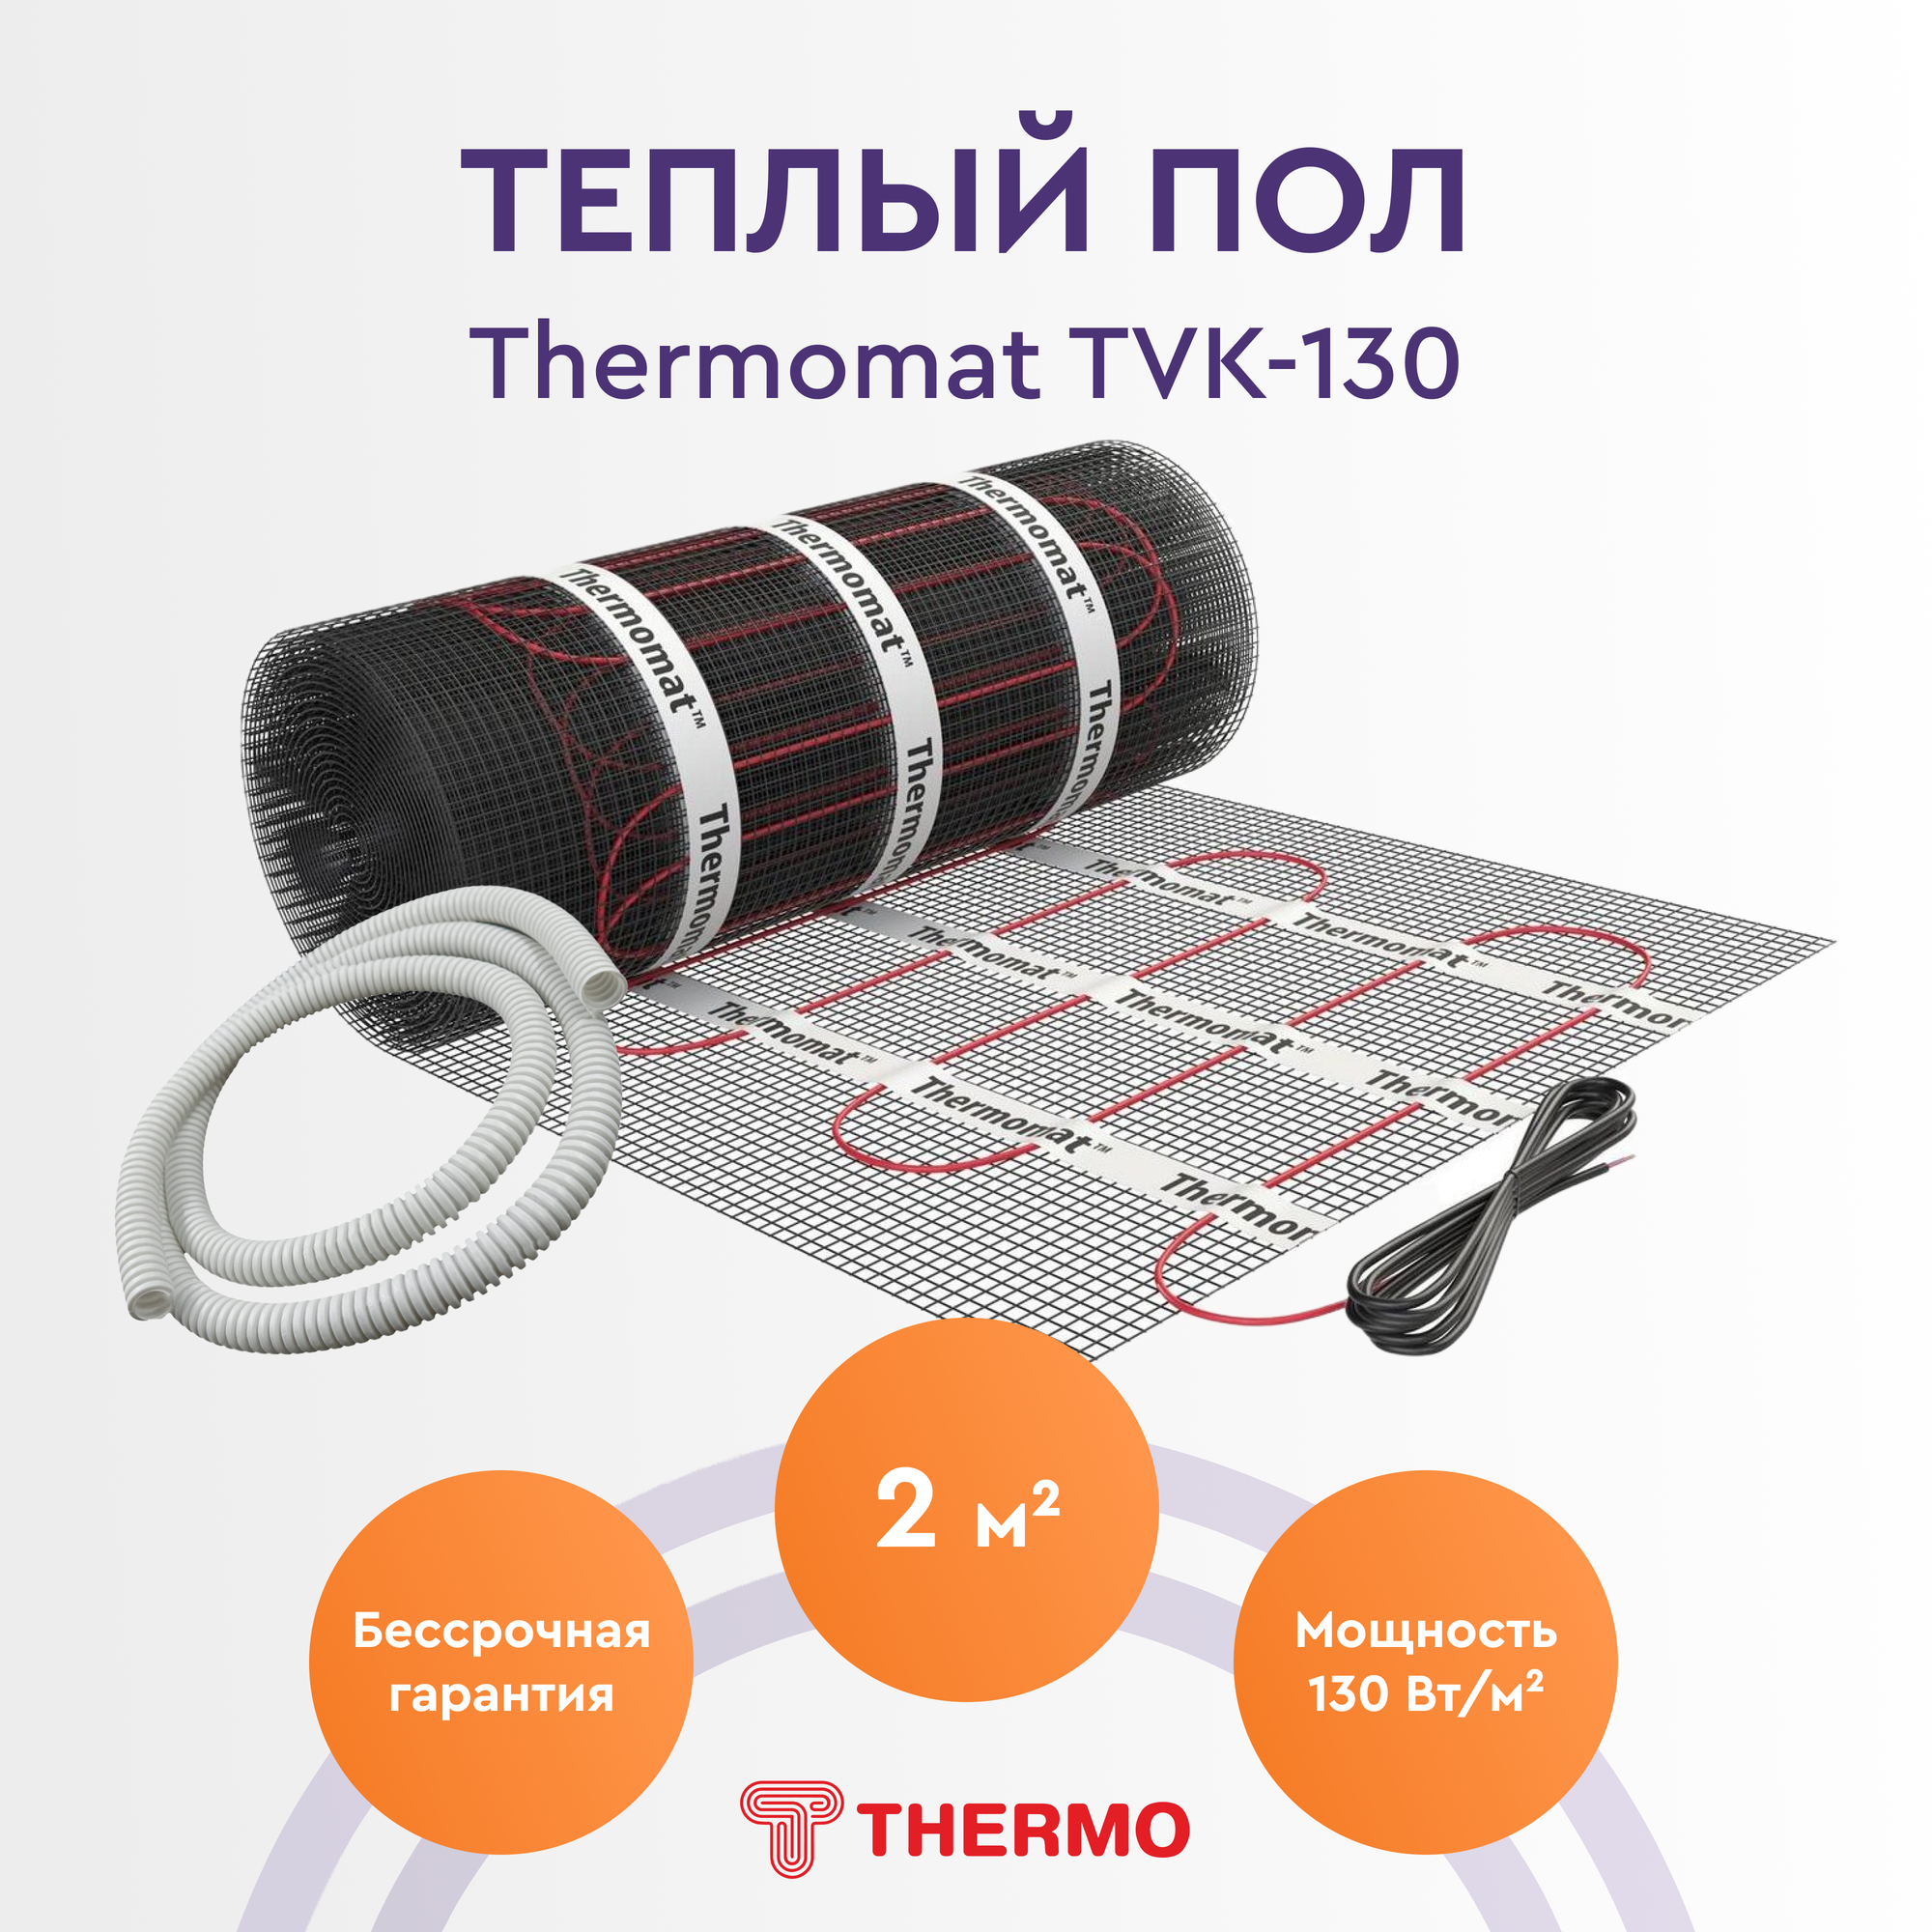 Теплый пол Thermo Thermomat TVK-130 2м. кв.